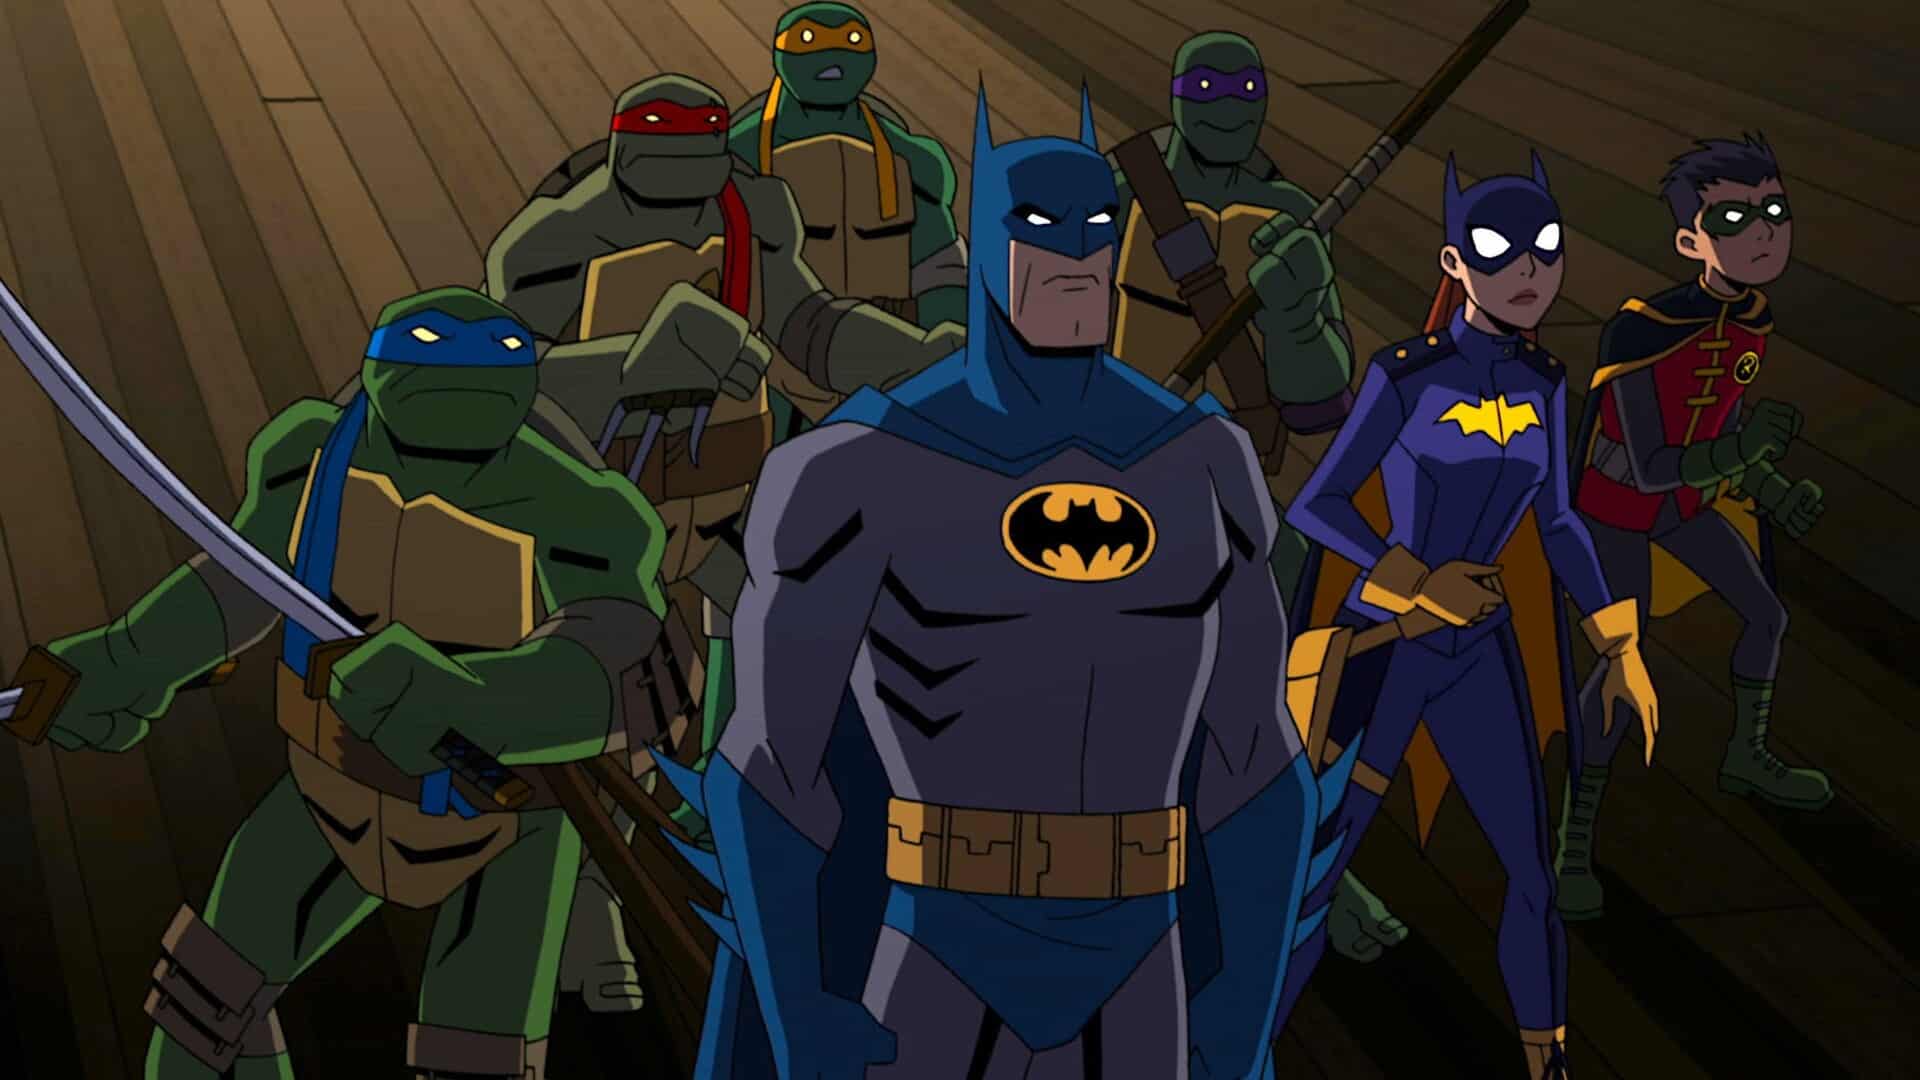 Batman vs. Teenage Mutant Ninja Turtles Animated Movie Coming This Spring;  First Images Revealed